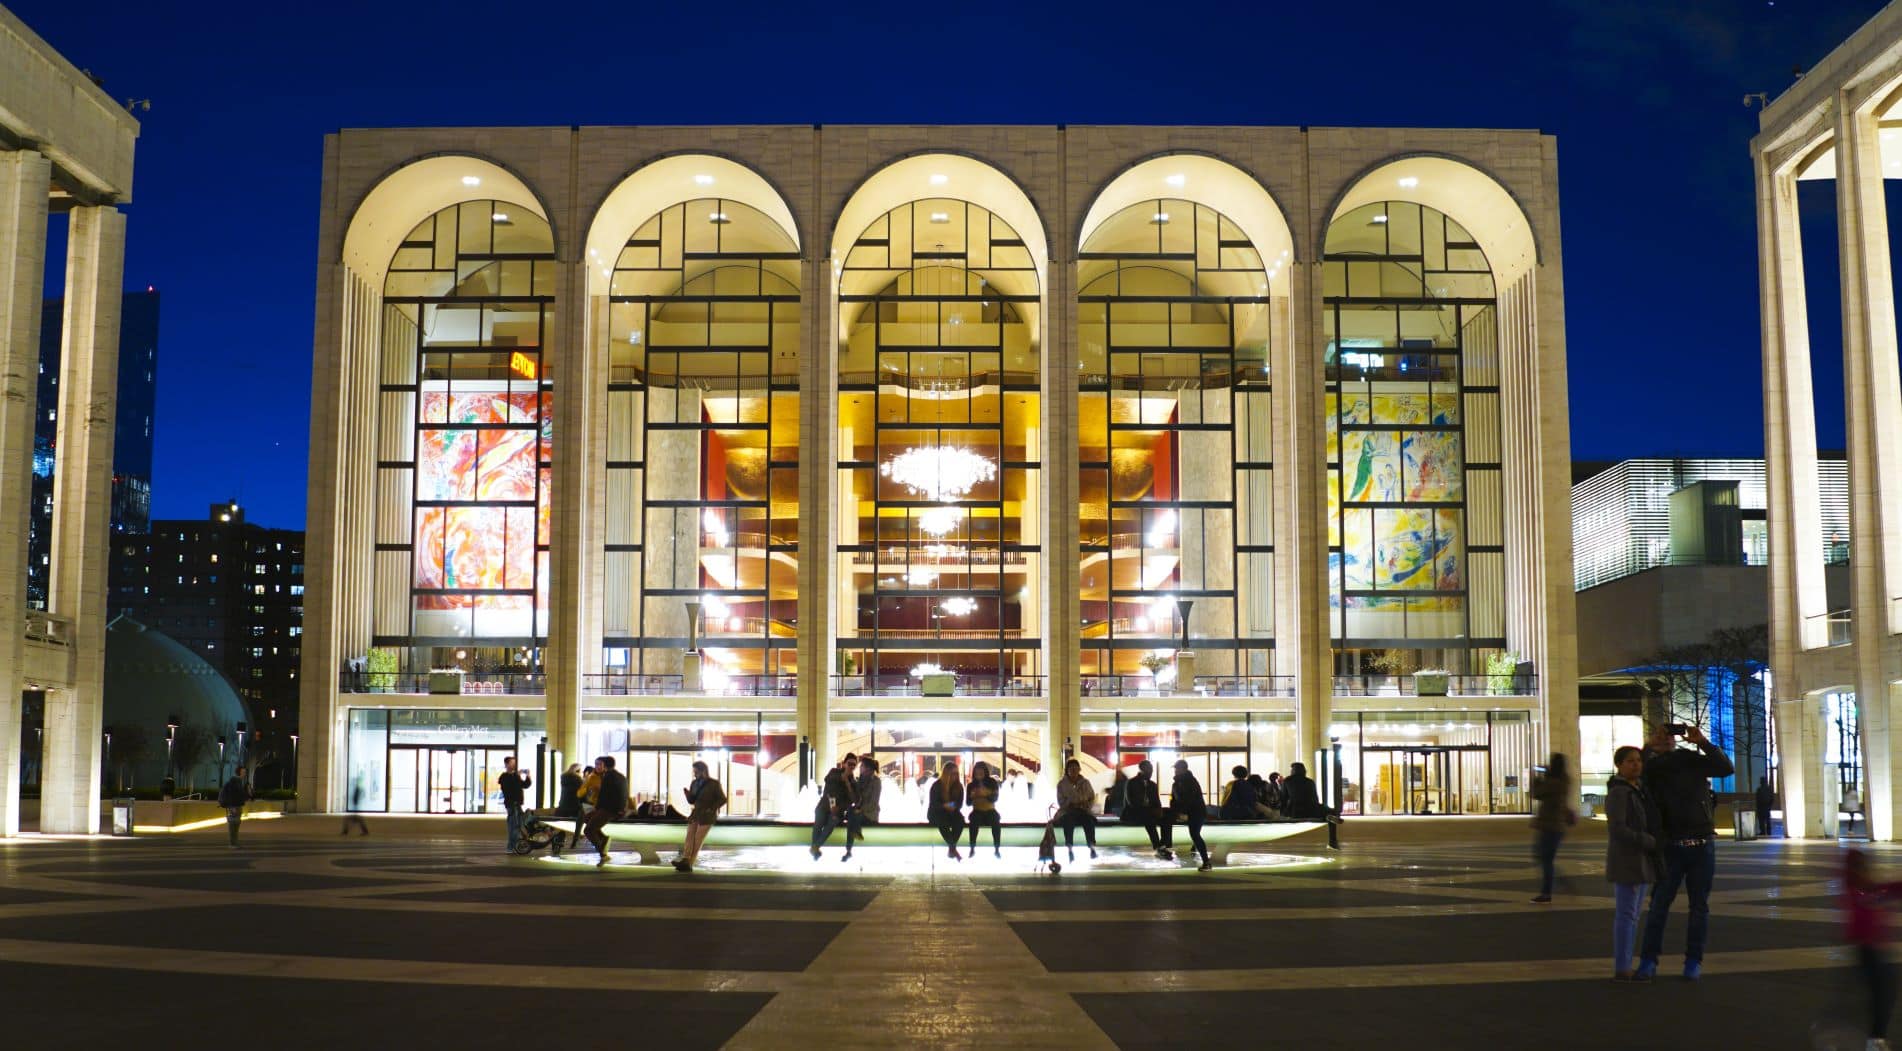 The Metropolitan Opera at Lincoln Center in Manhattan